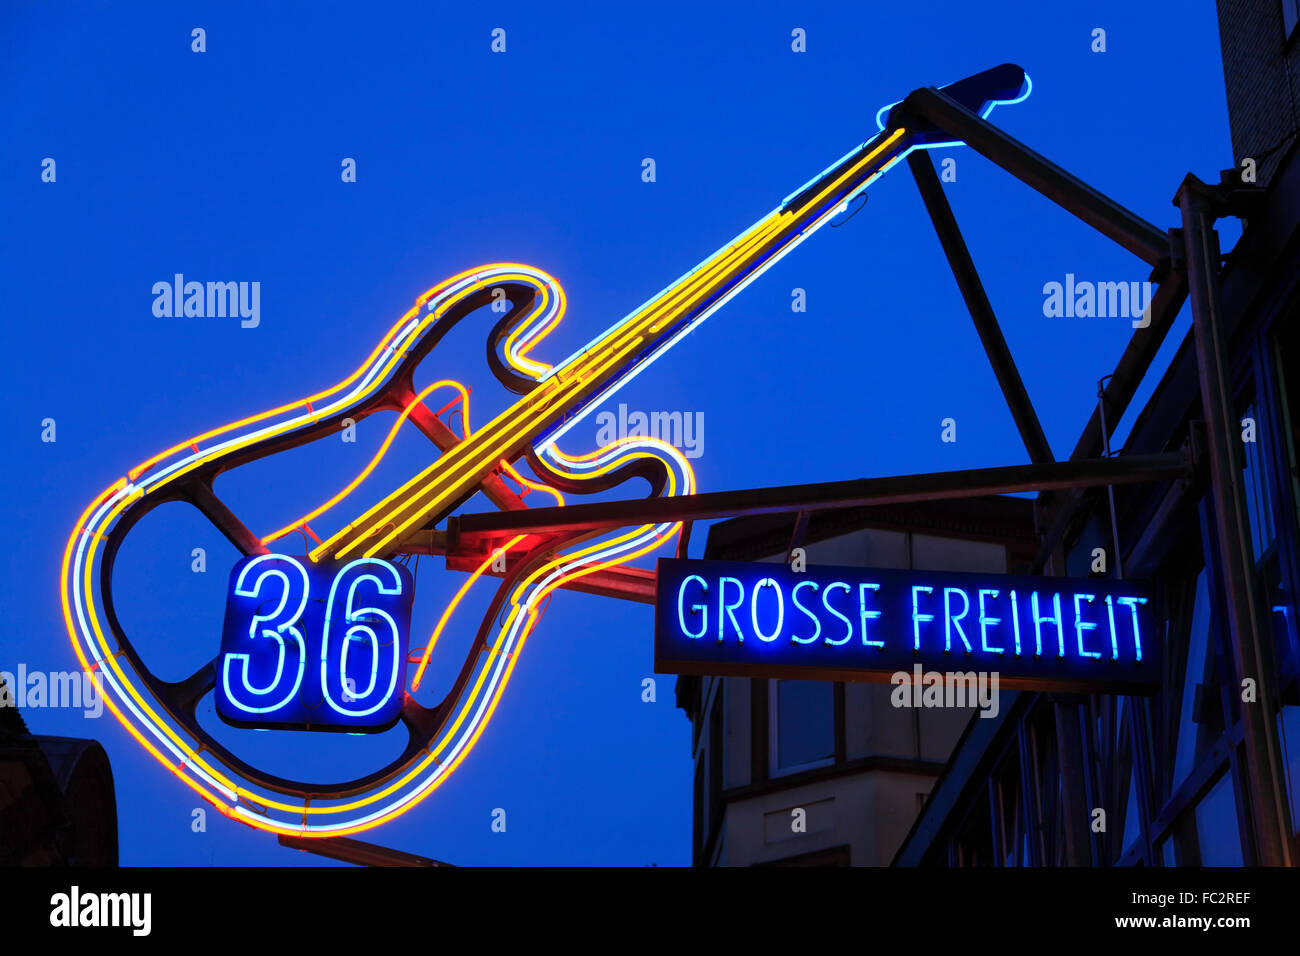 Redlight District St. Pauli, Music Club Grosse Freiheit 36 près de Reeperbahn, Hambourg, Allemagne, Europe Banque D'Images